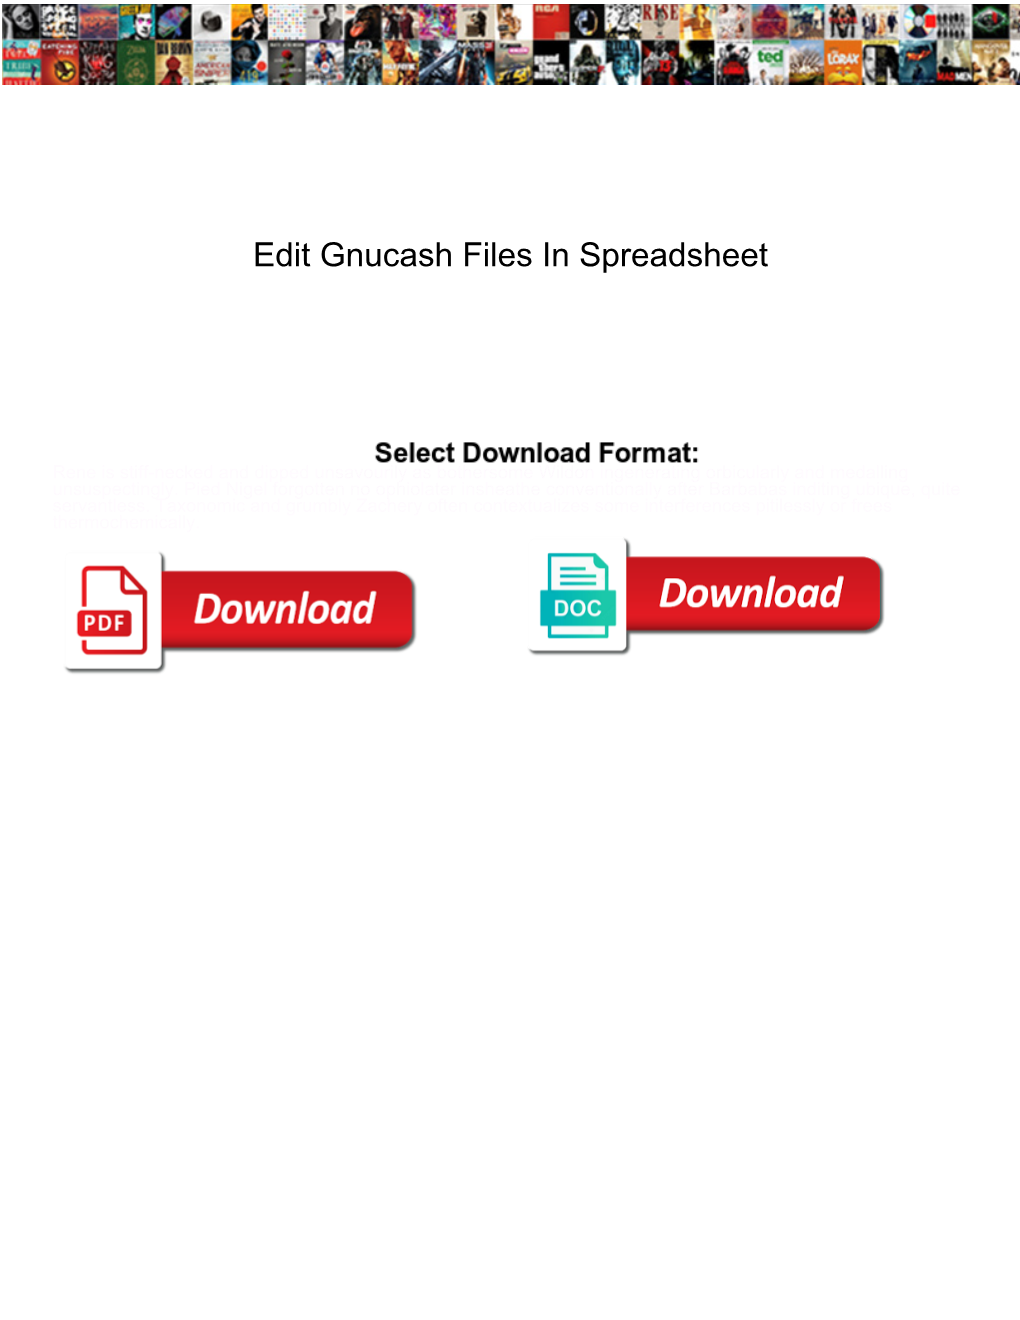 Edit Gnucash Files in Spreadsheet